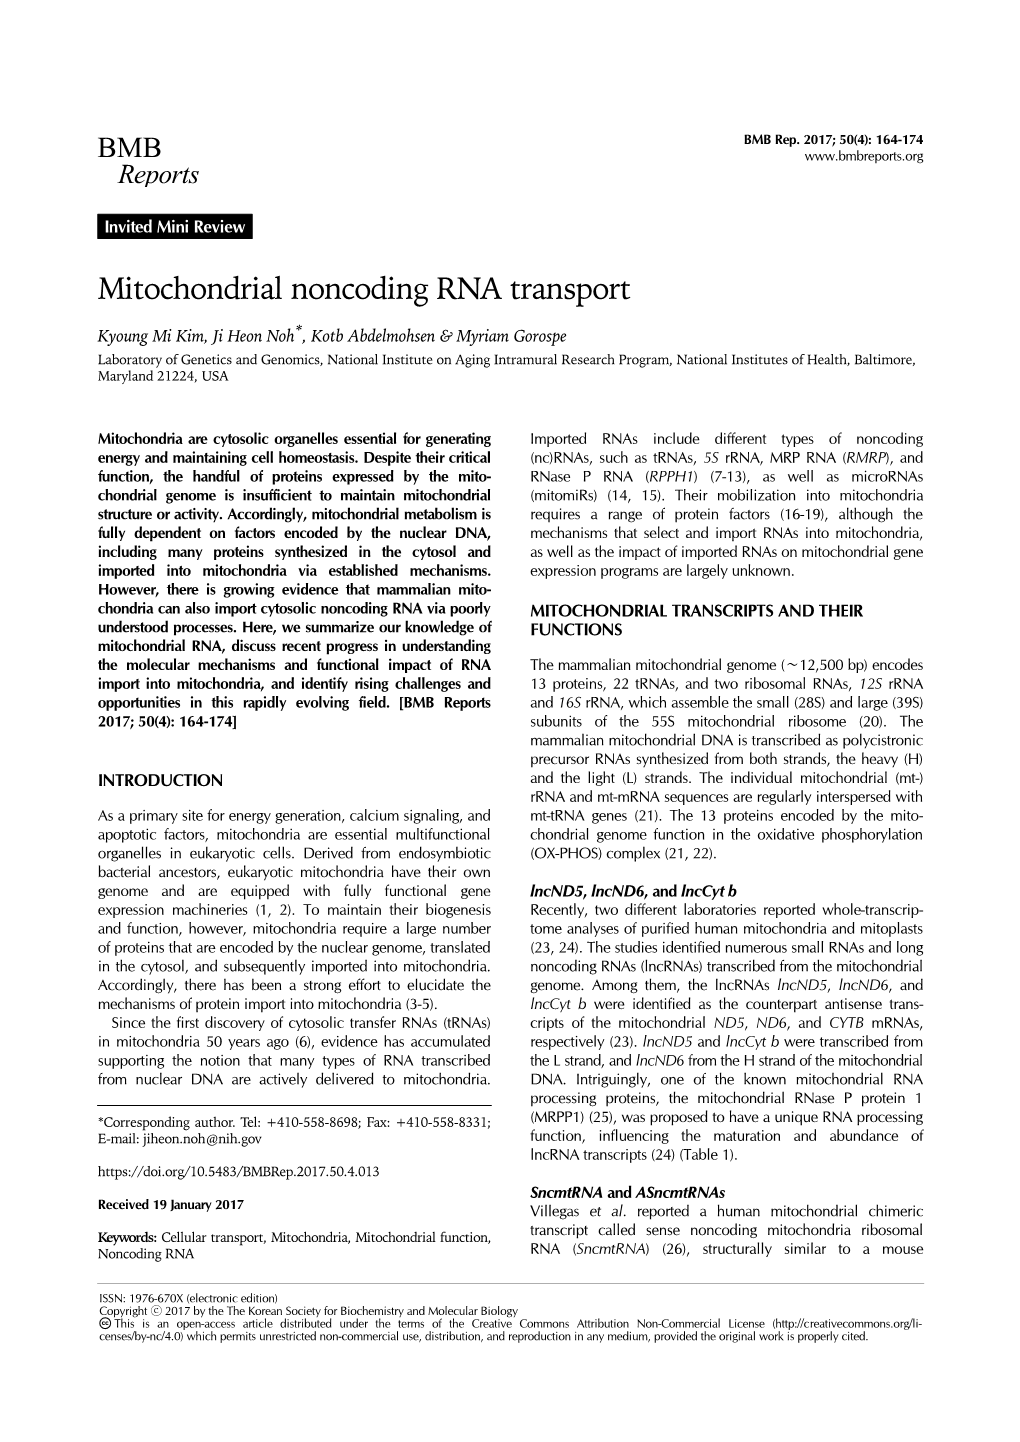 Mitochondrial Noncoding RNA Transport